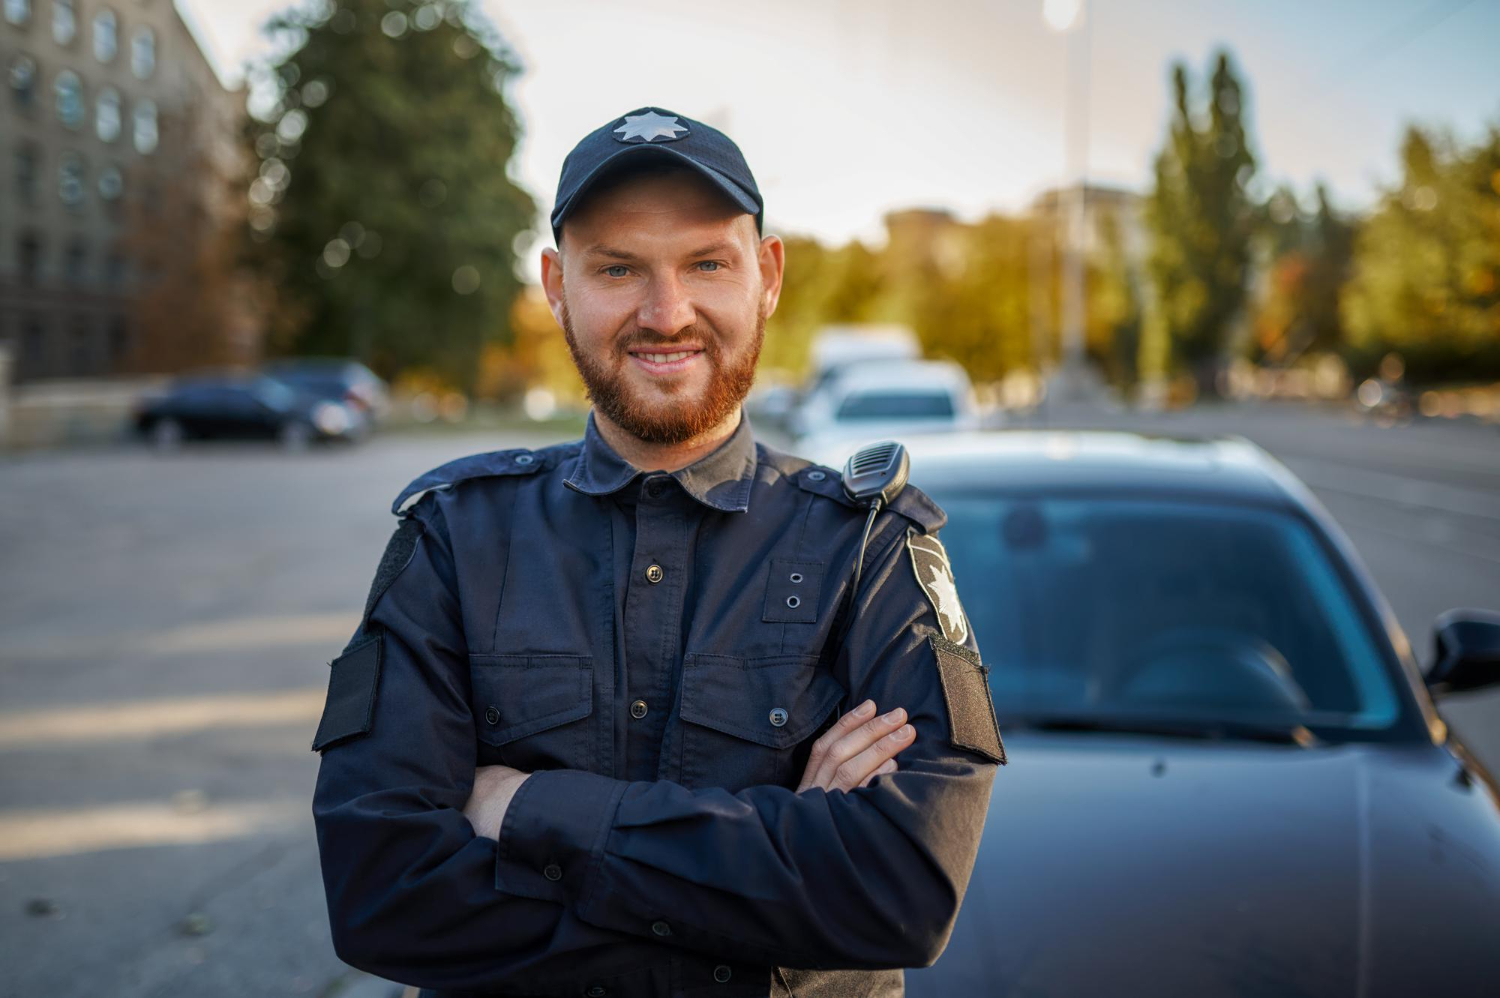 male-police-officer-uniform-poses-near-car